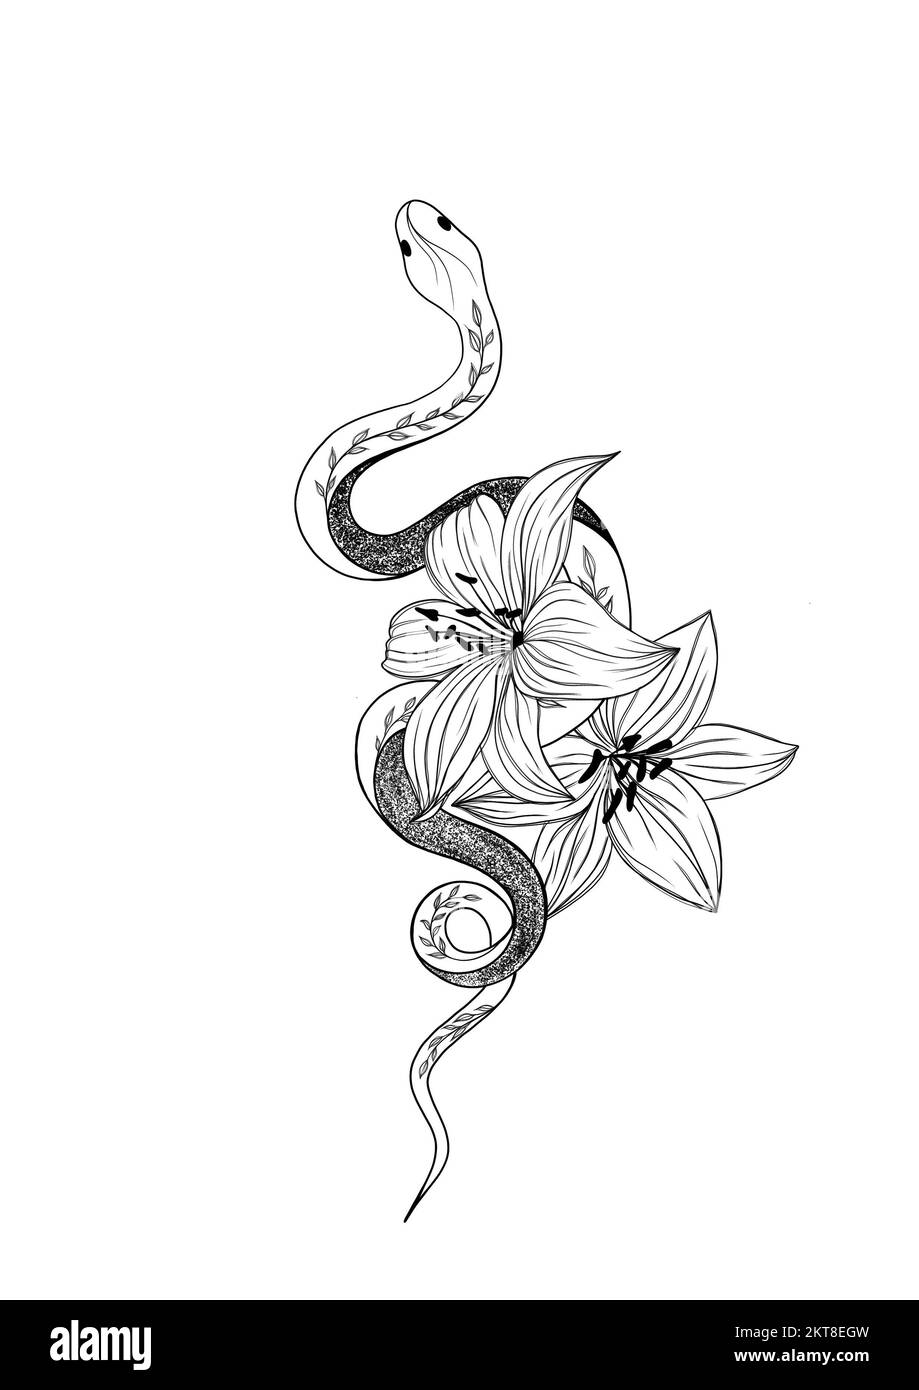 Serpent tatouage avec nénuphars. Encre traditionnelle Tattoo Old School style Tattooing. illustration de la silhouette. Banque D'Images